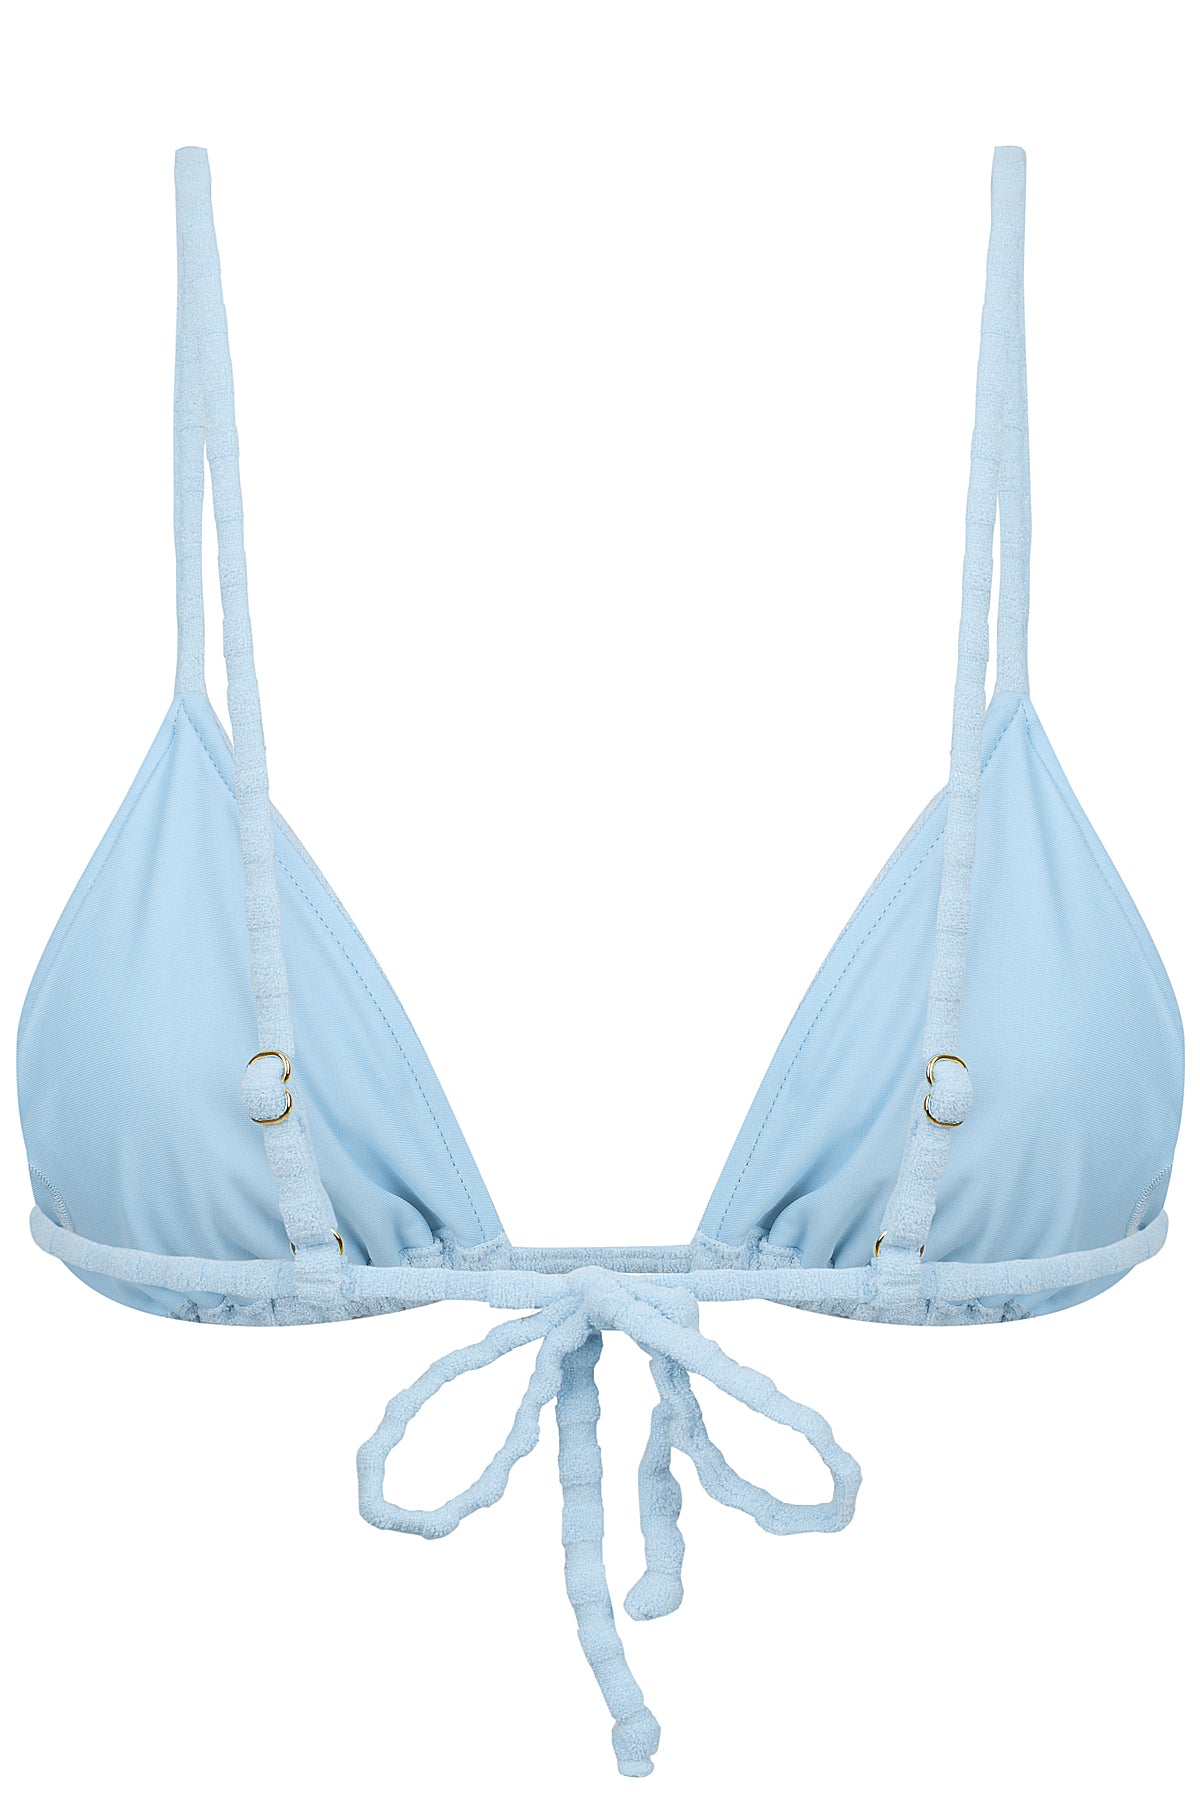 Triangl Swimwear - New Summer Essentials 💙 The STEVIE Baby Blue